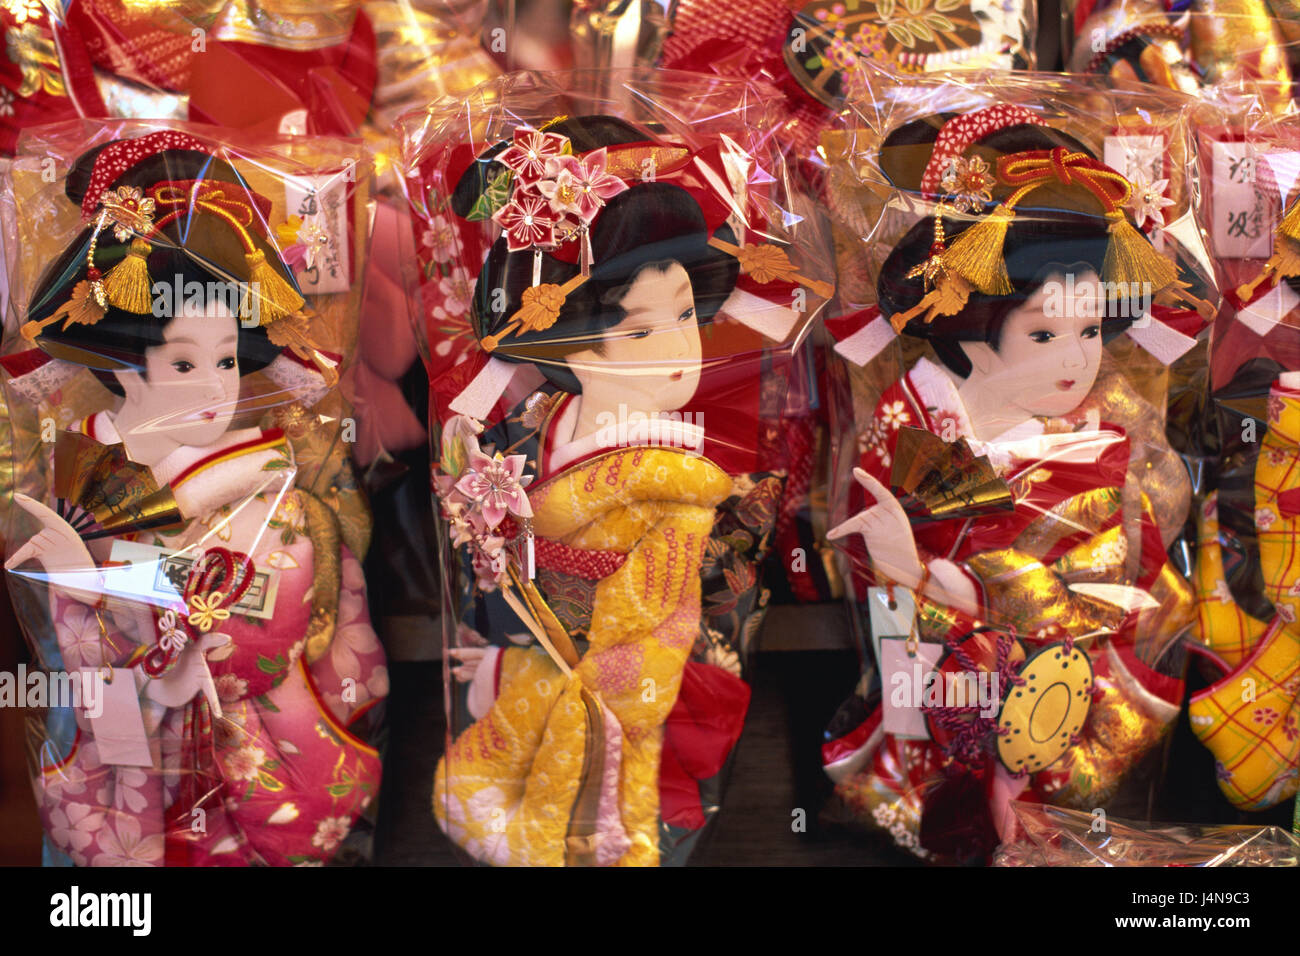 Japan, Honshu, Tokyo, Hagoita Fairly, Battledore festival, souvenir, dolls, Asia, feast, memory, tourism, destination, brightly, geishas, envelope, Ukiyo E, kitsch, art, culture, Stock Photo